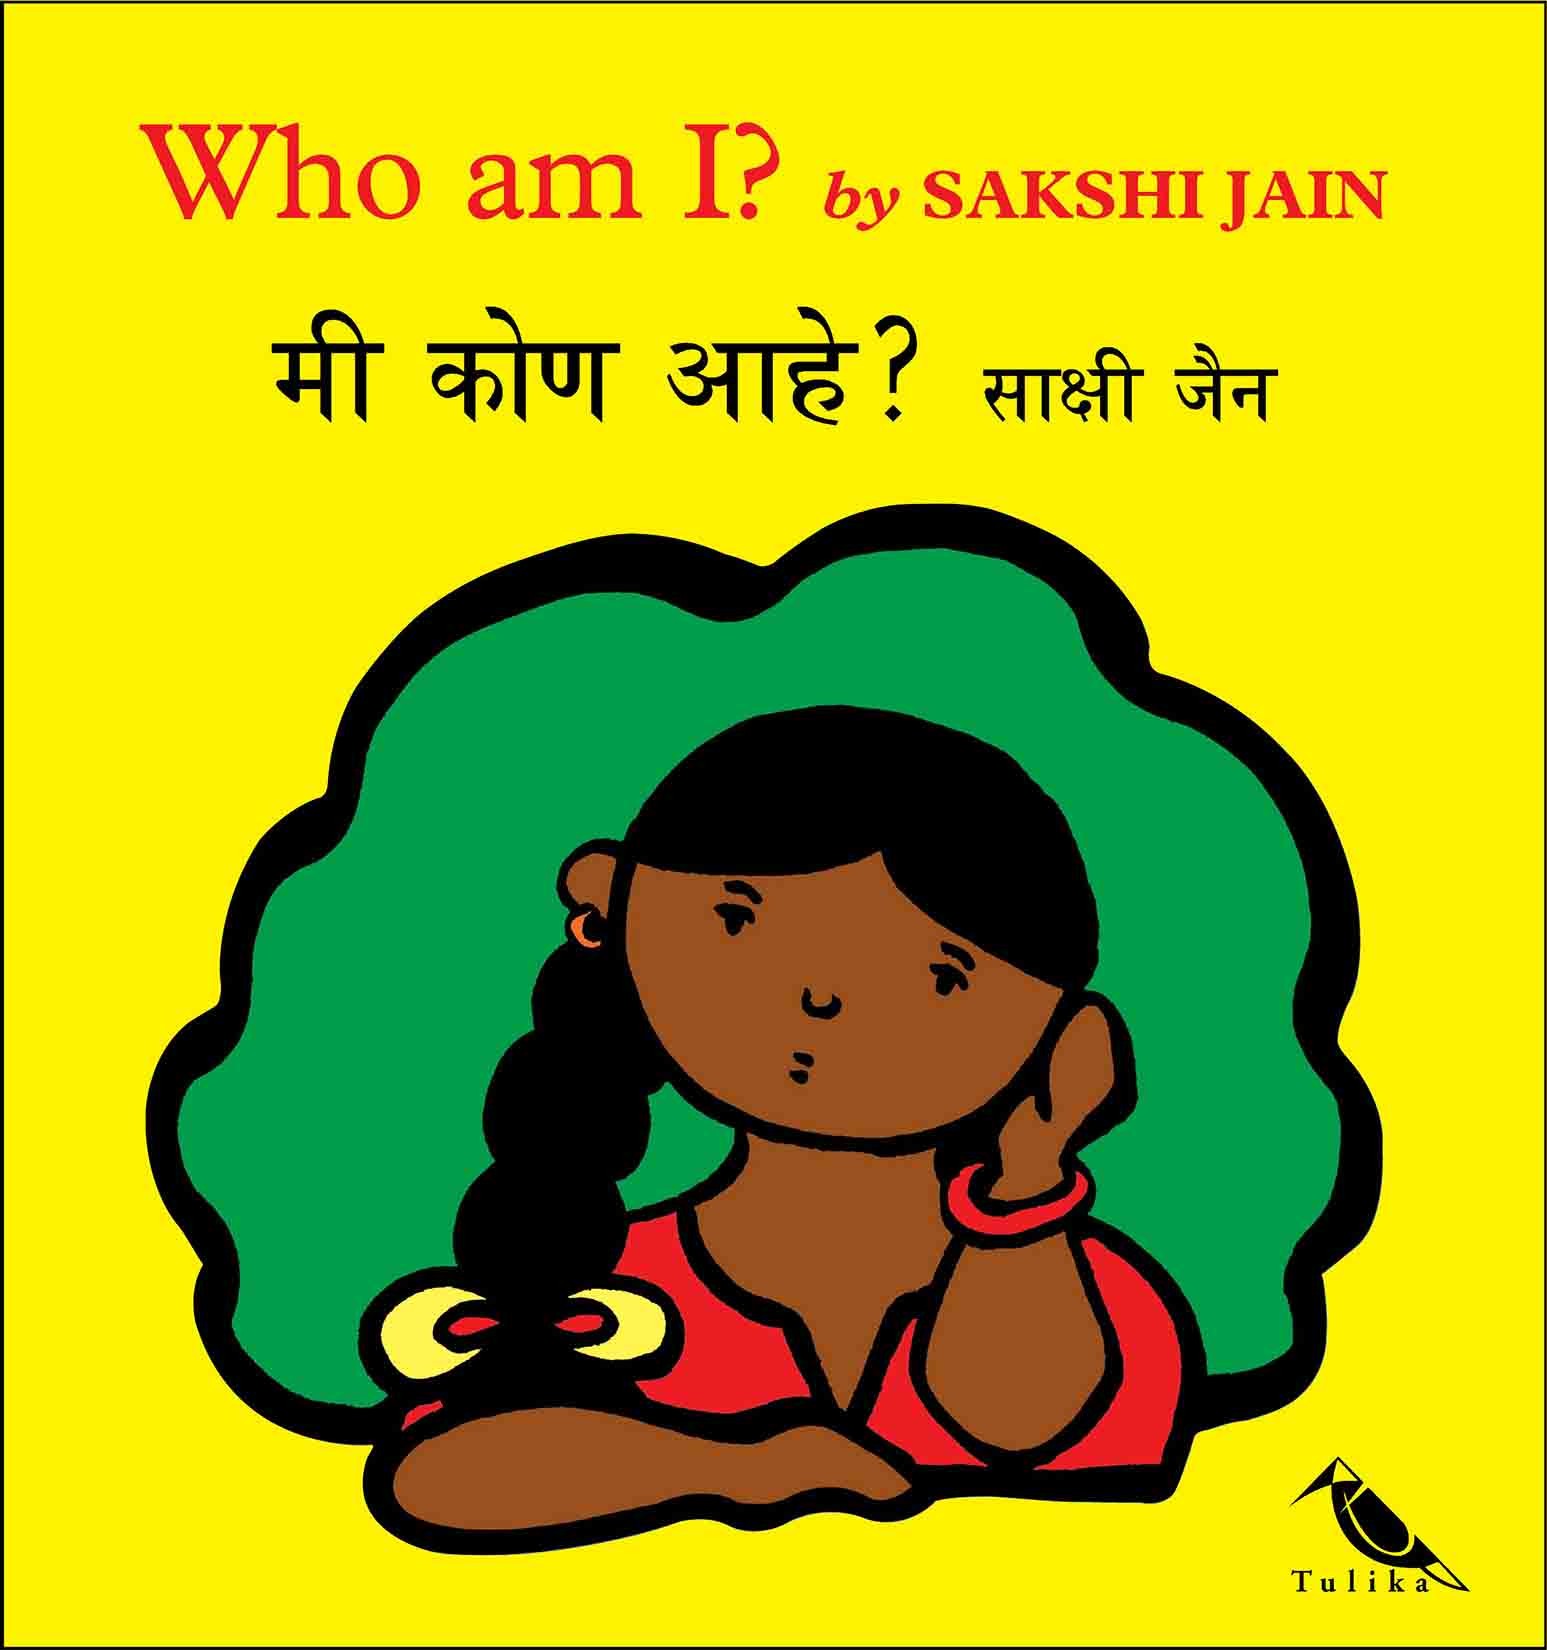 Who Am I?/Mee Kone Aahey? (English-Marathi)